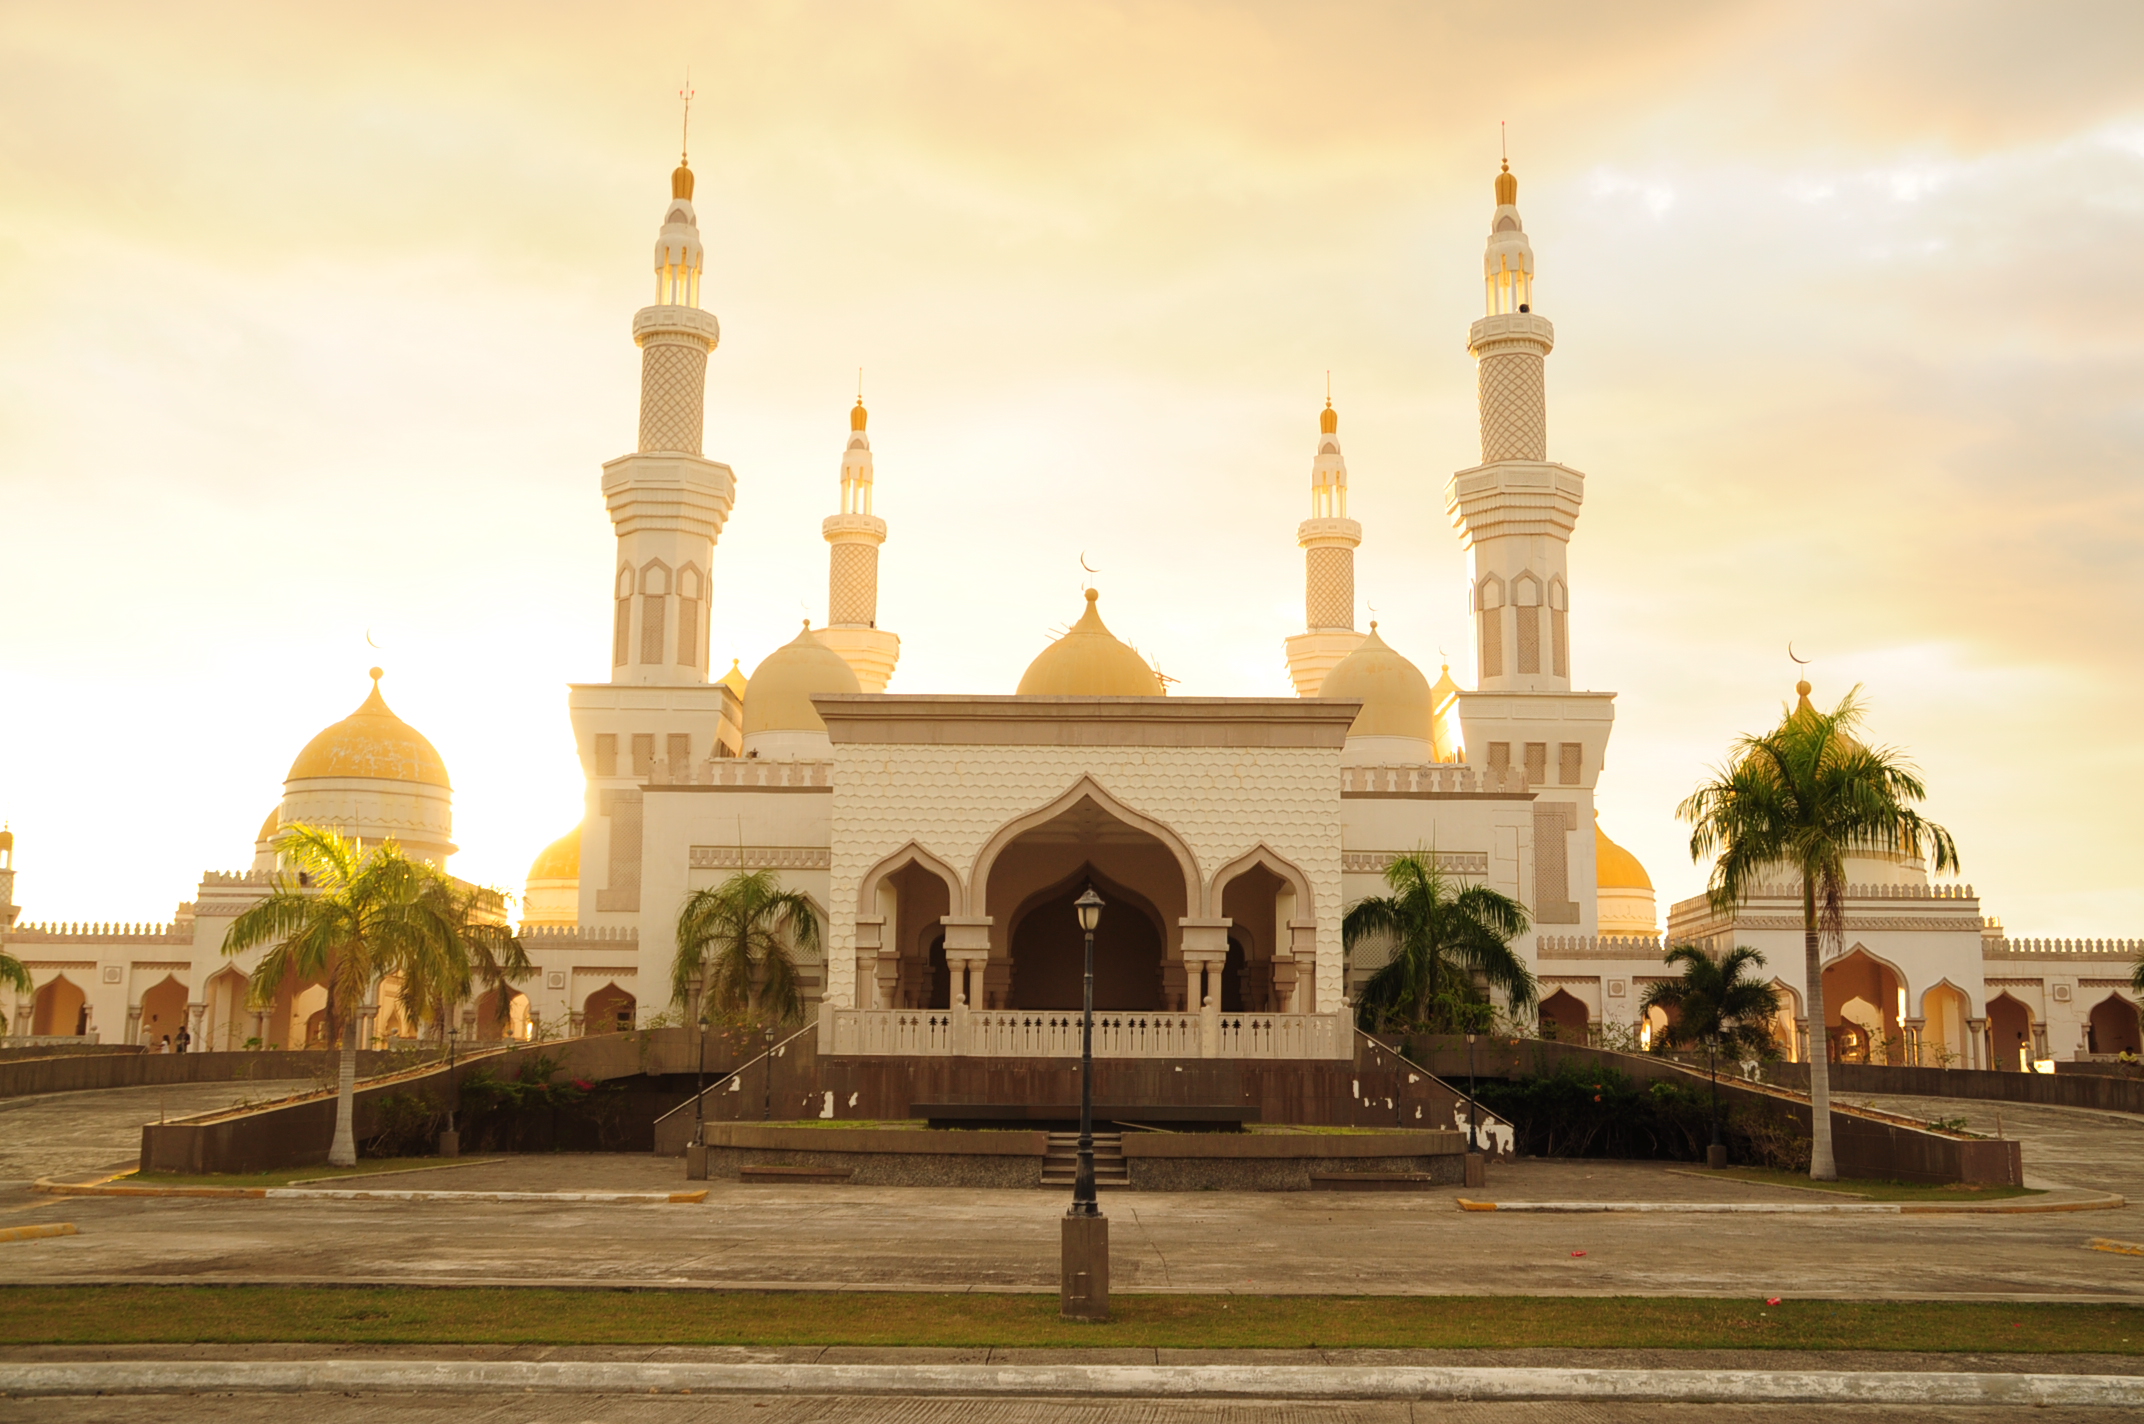 Sultan Hassanal Bolkiah Mosque, Cotabato CitySultan Hassanal Bolkiah Mosque, Cotabato City